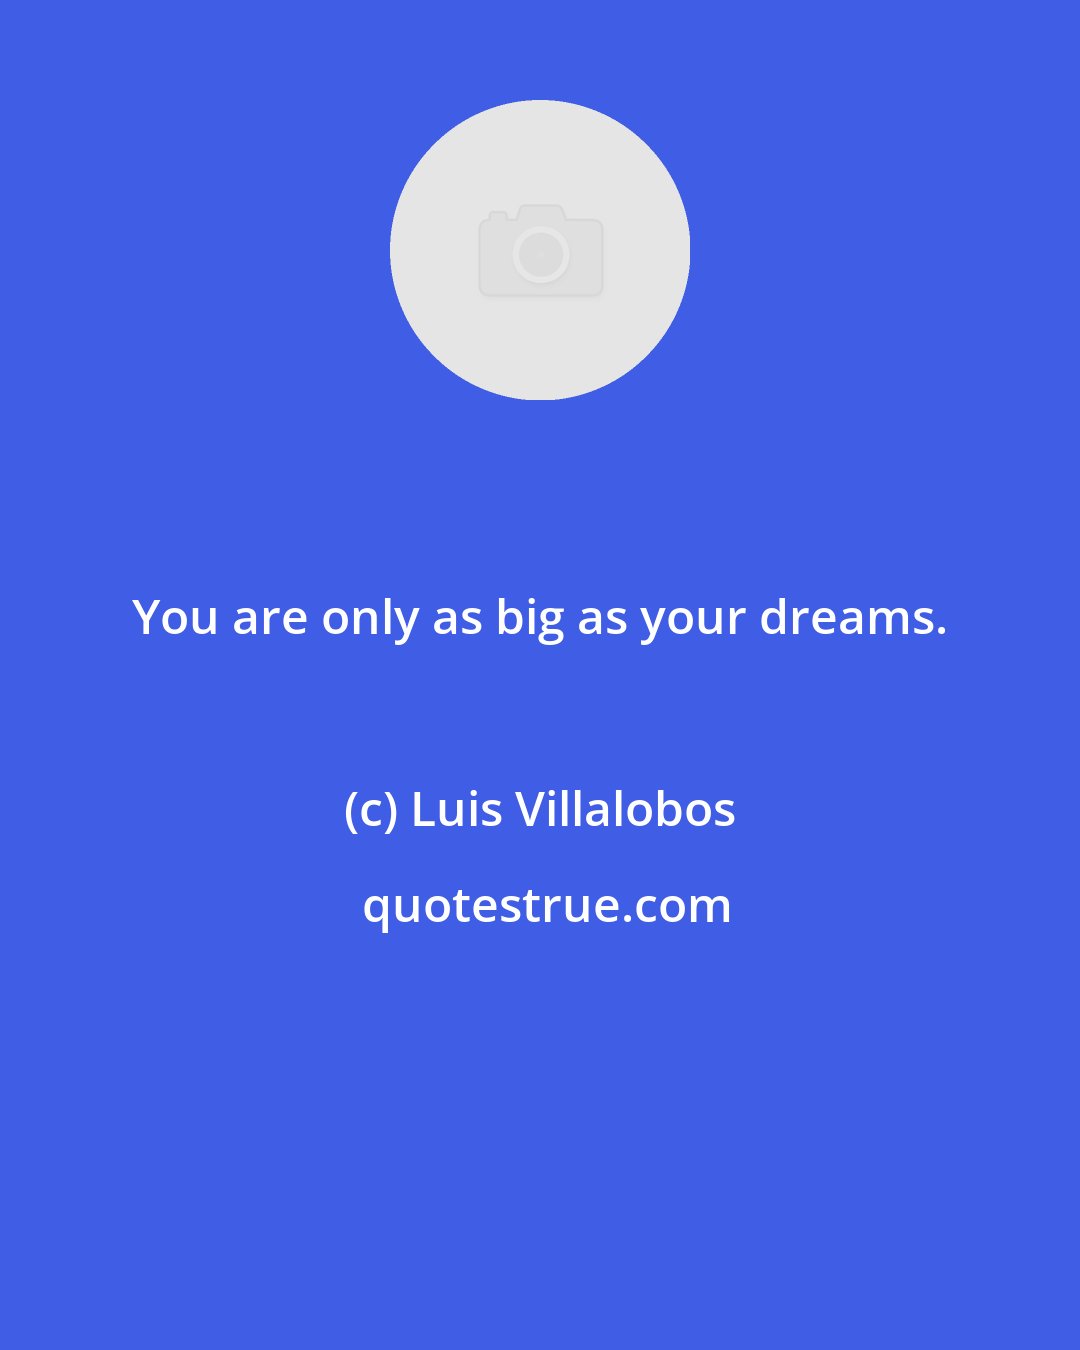 Luis Villalobos: You are only as big as your dreams.